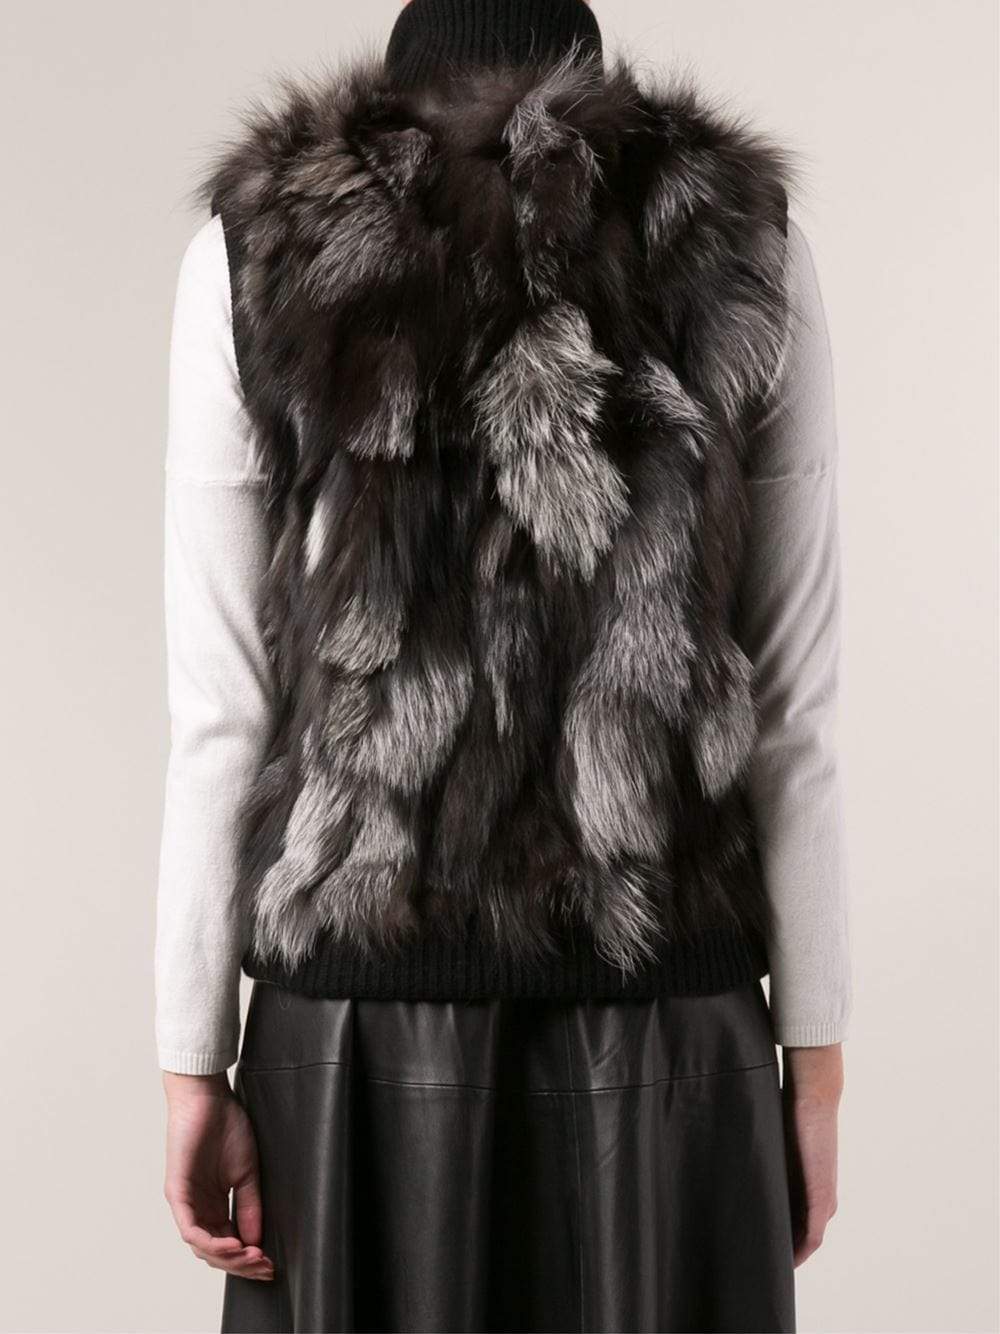 MICHAEL KORS-Fur Sweater Vest-